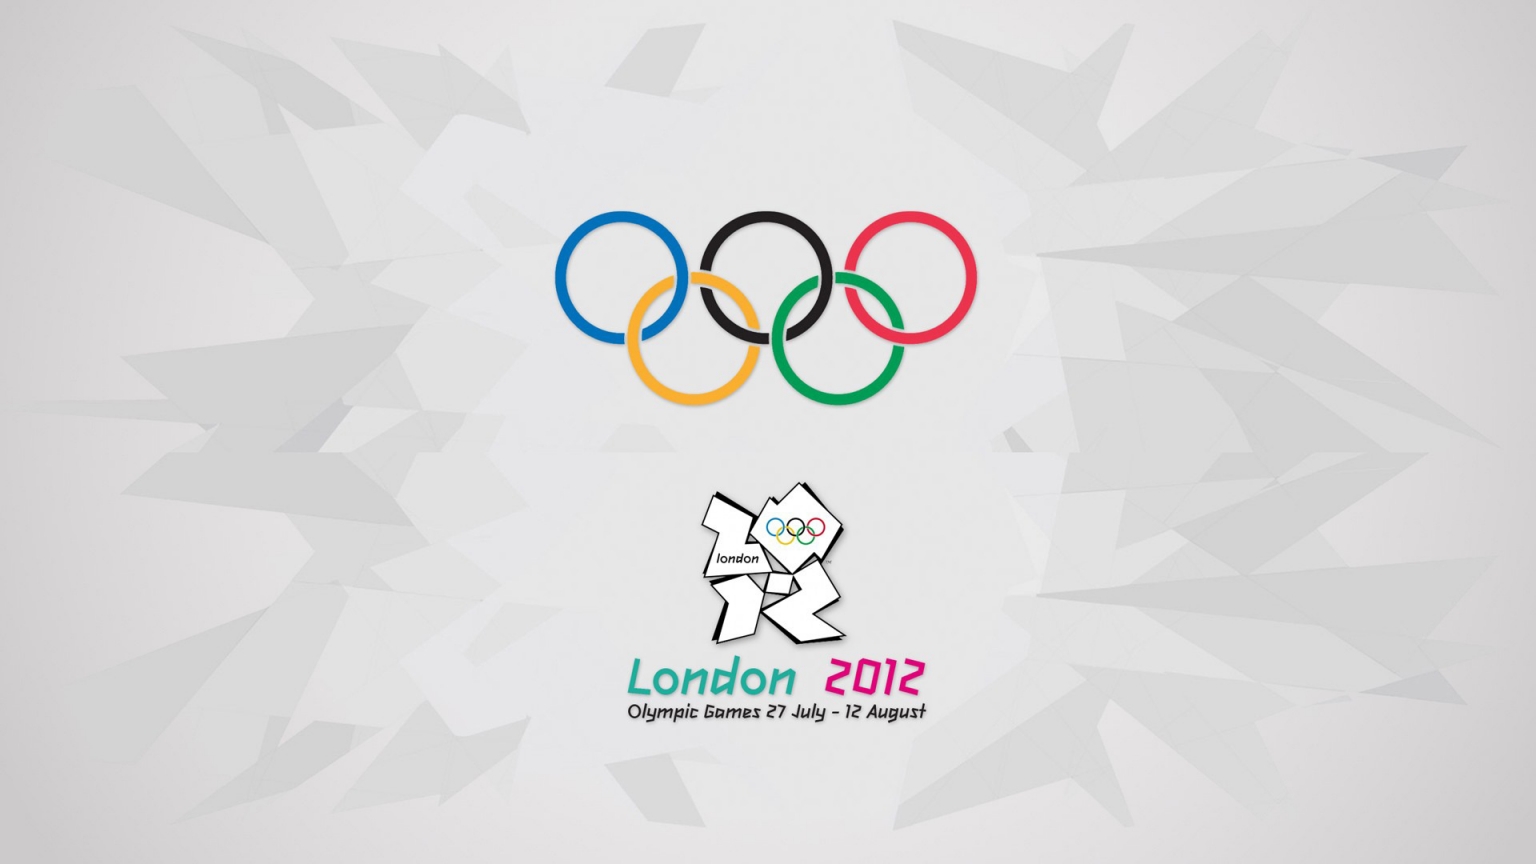 London Olympics for 1536 x 864 HDTV resolution